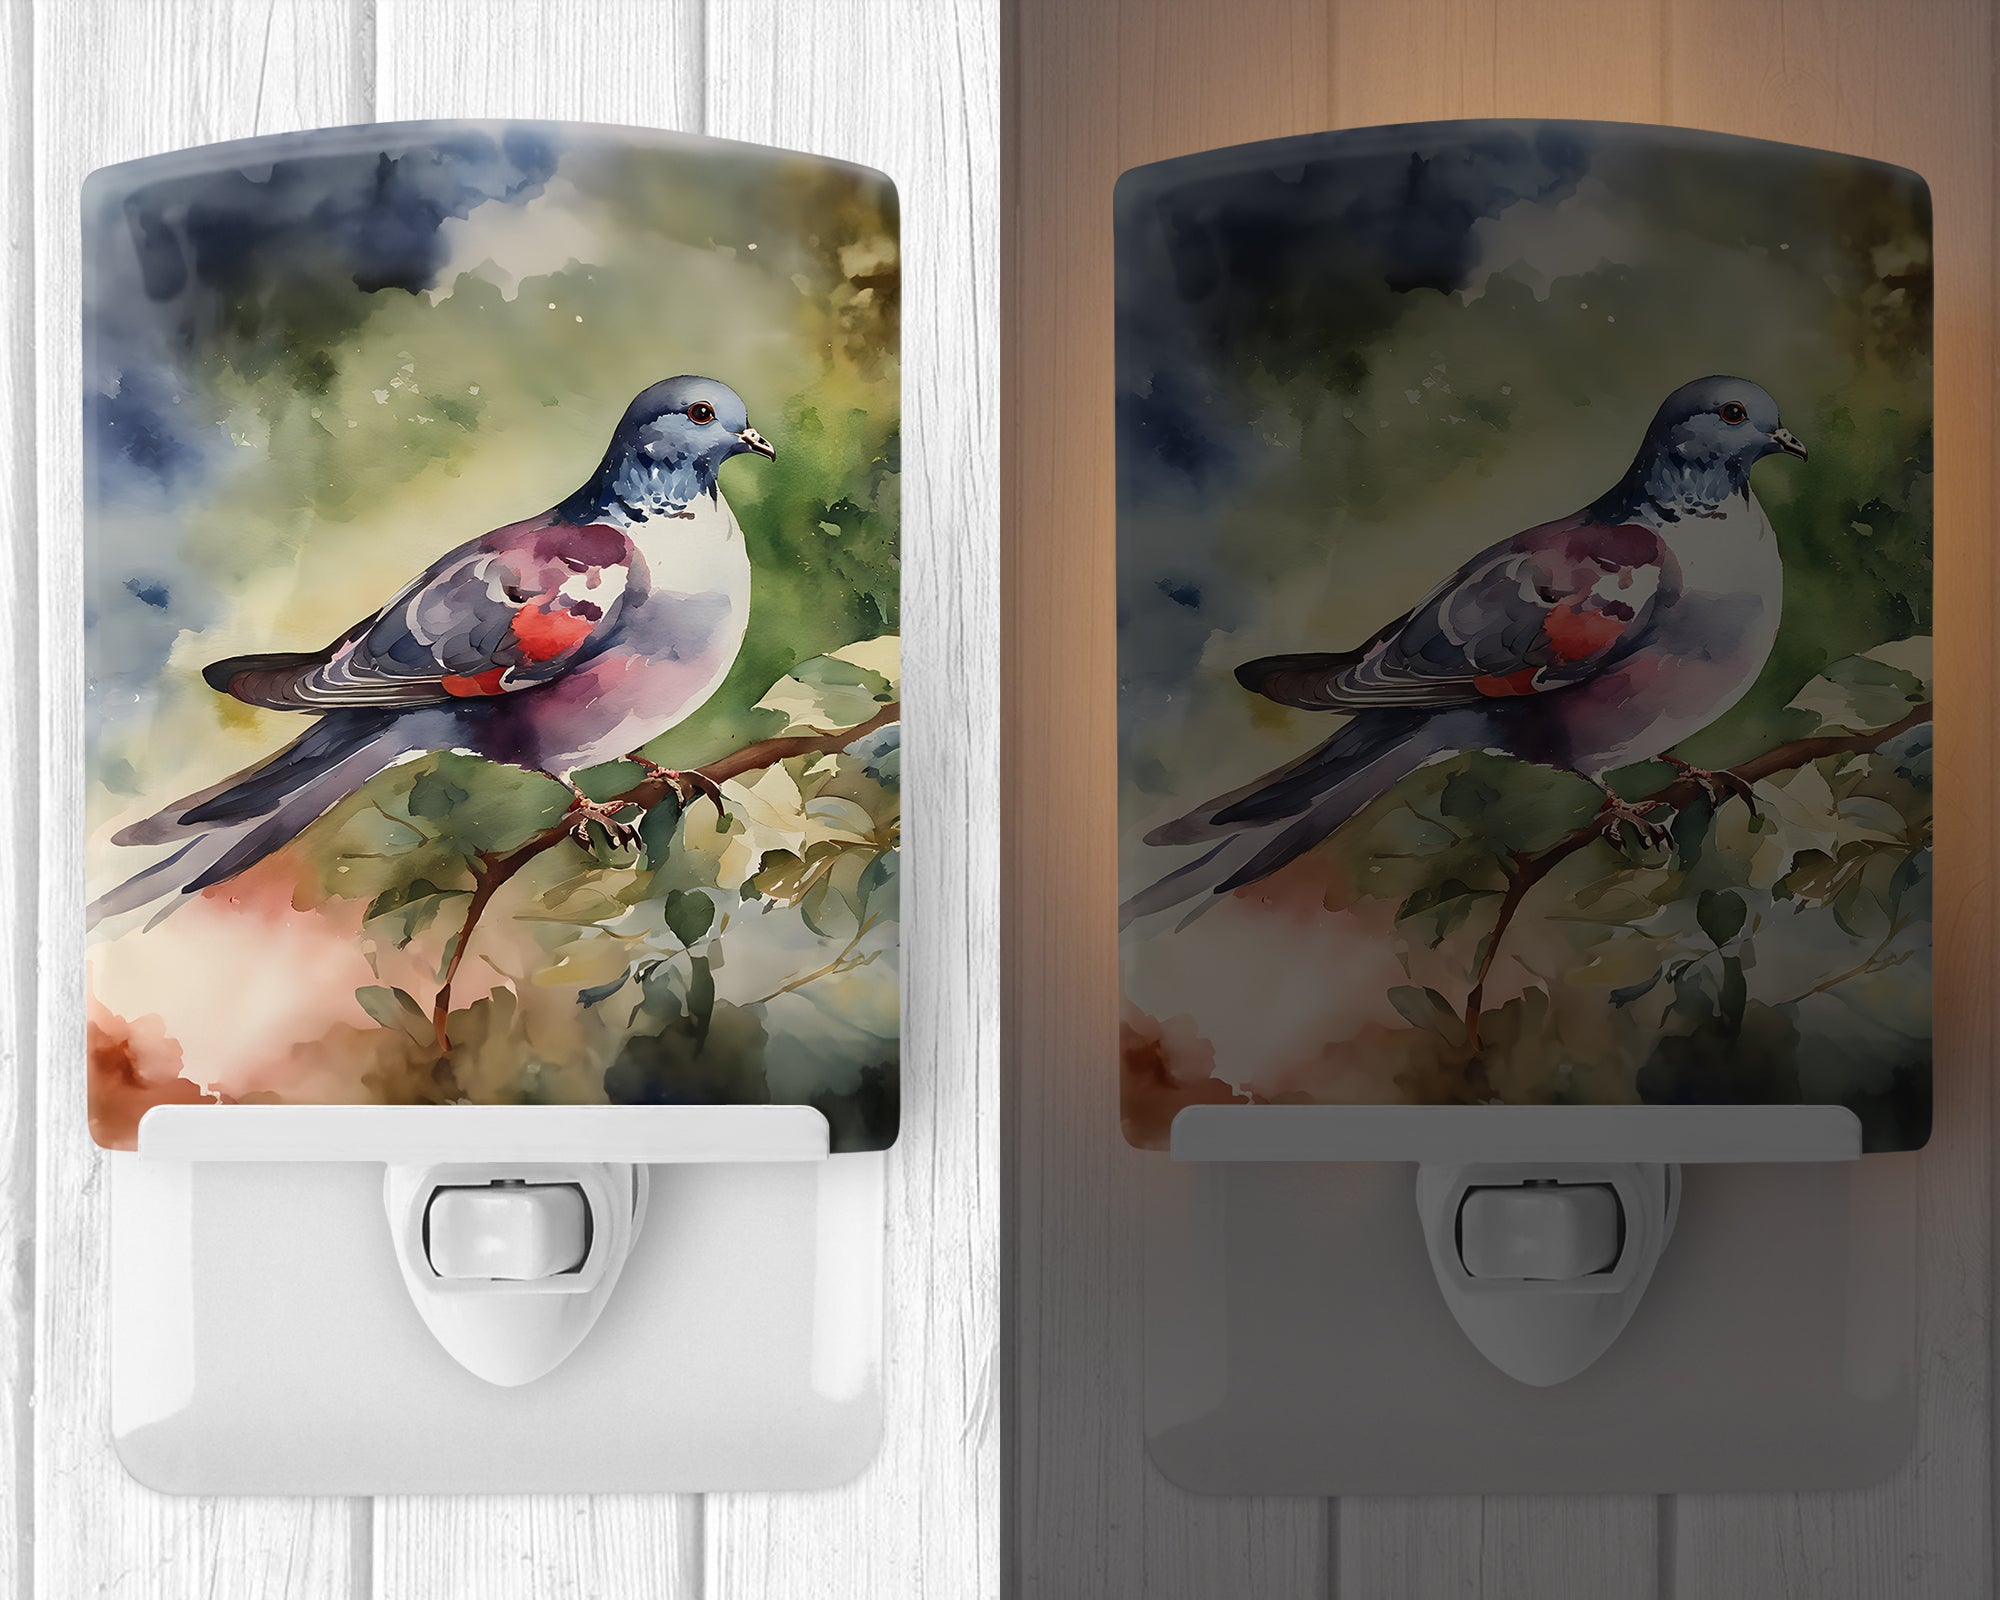 Buy this Pigeon Ceramic Night Light